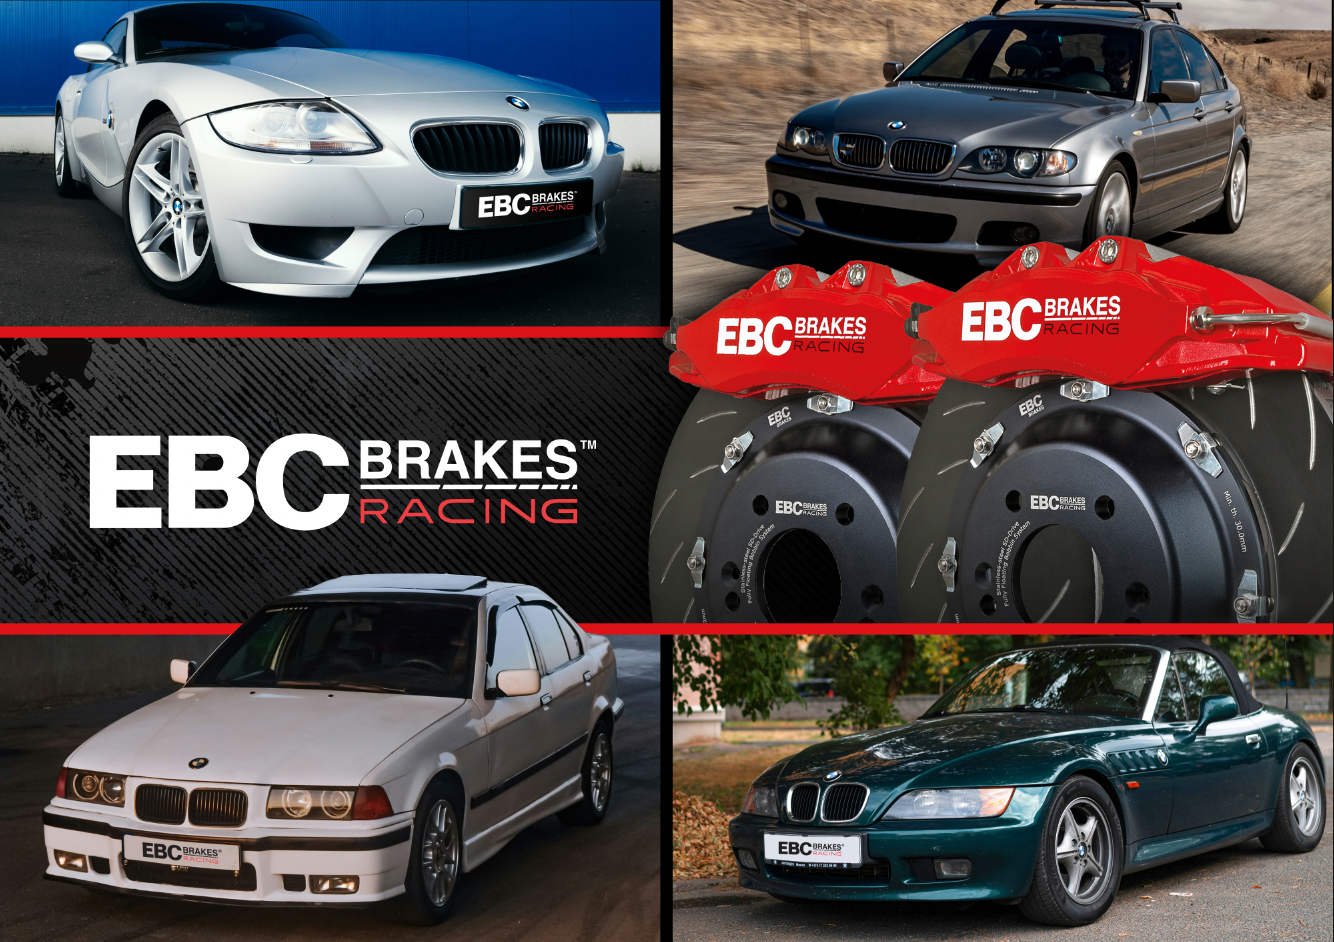 6-Piston Apollo Big Brake Kit Now Available for Non-‘M’ Versions of BMW E36/E46 3-Series and Z3/Z4